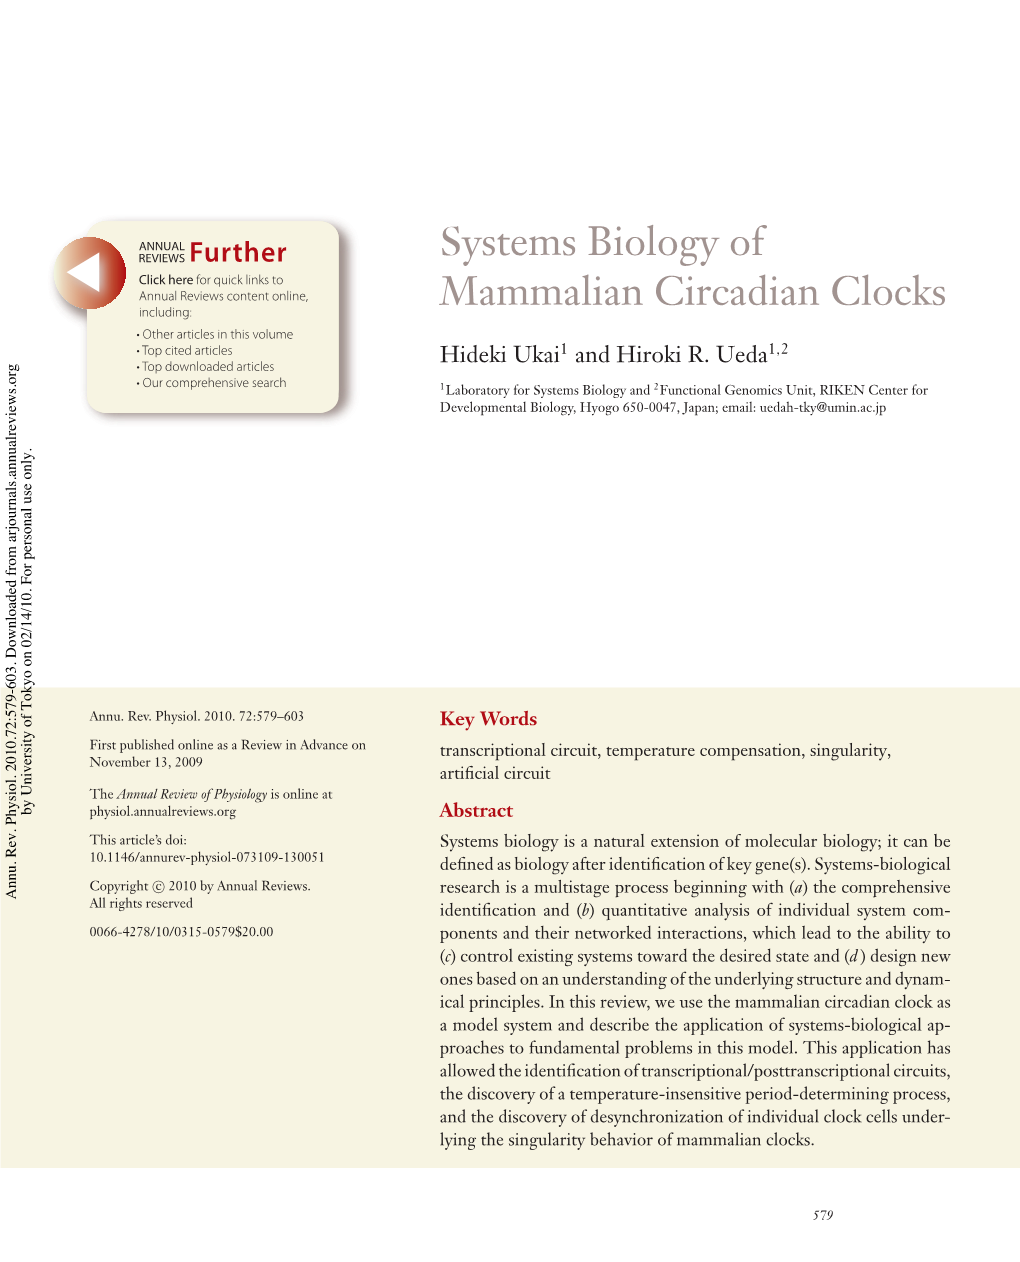 Systems Biology of Mammalian Circadian Clocks